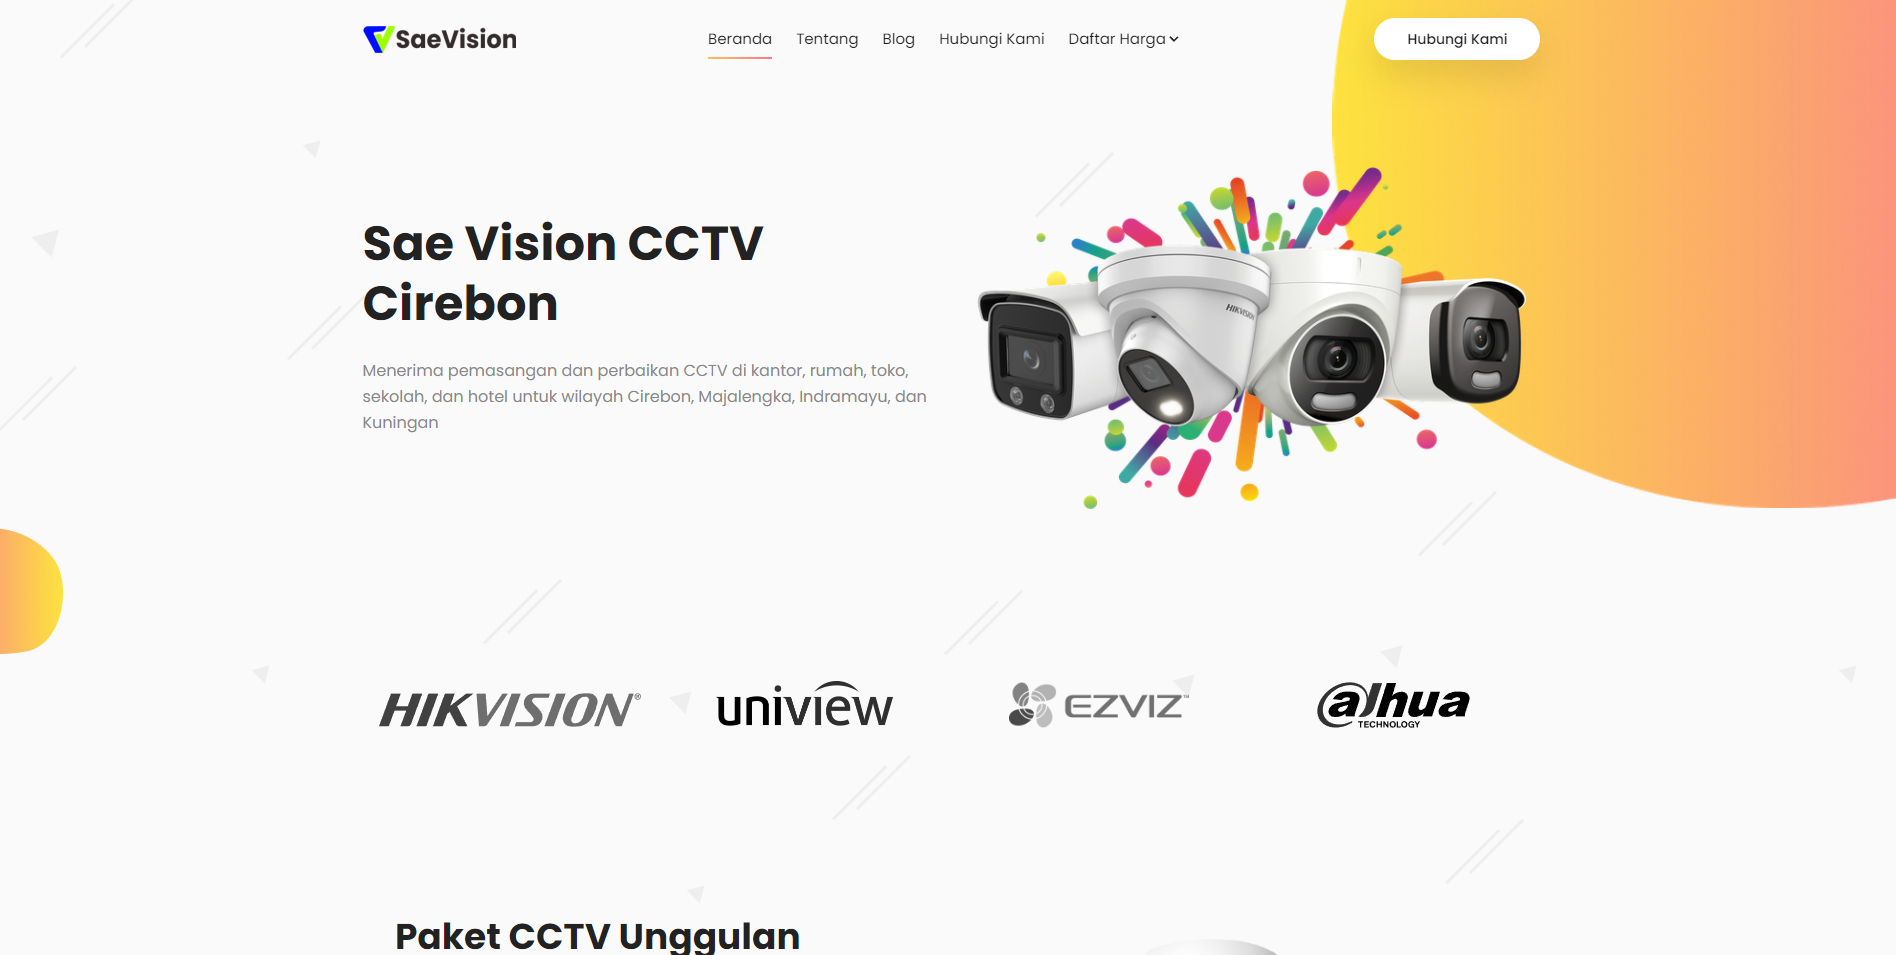 Sae Vision CCTV Website